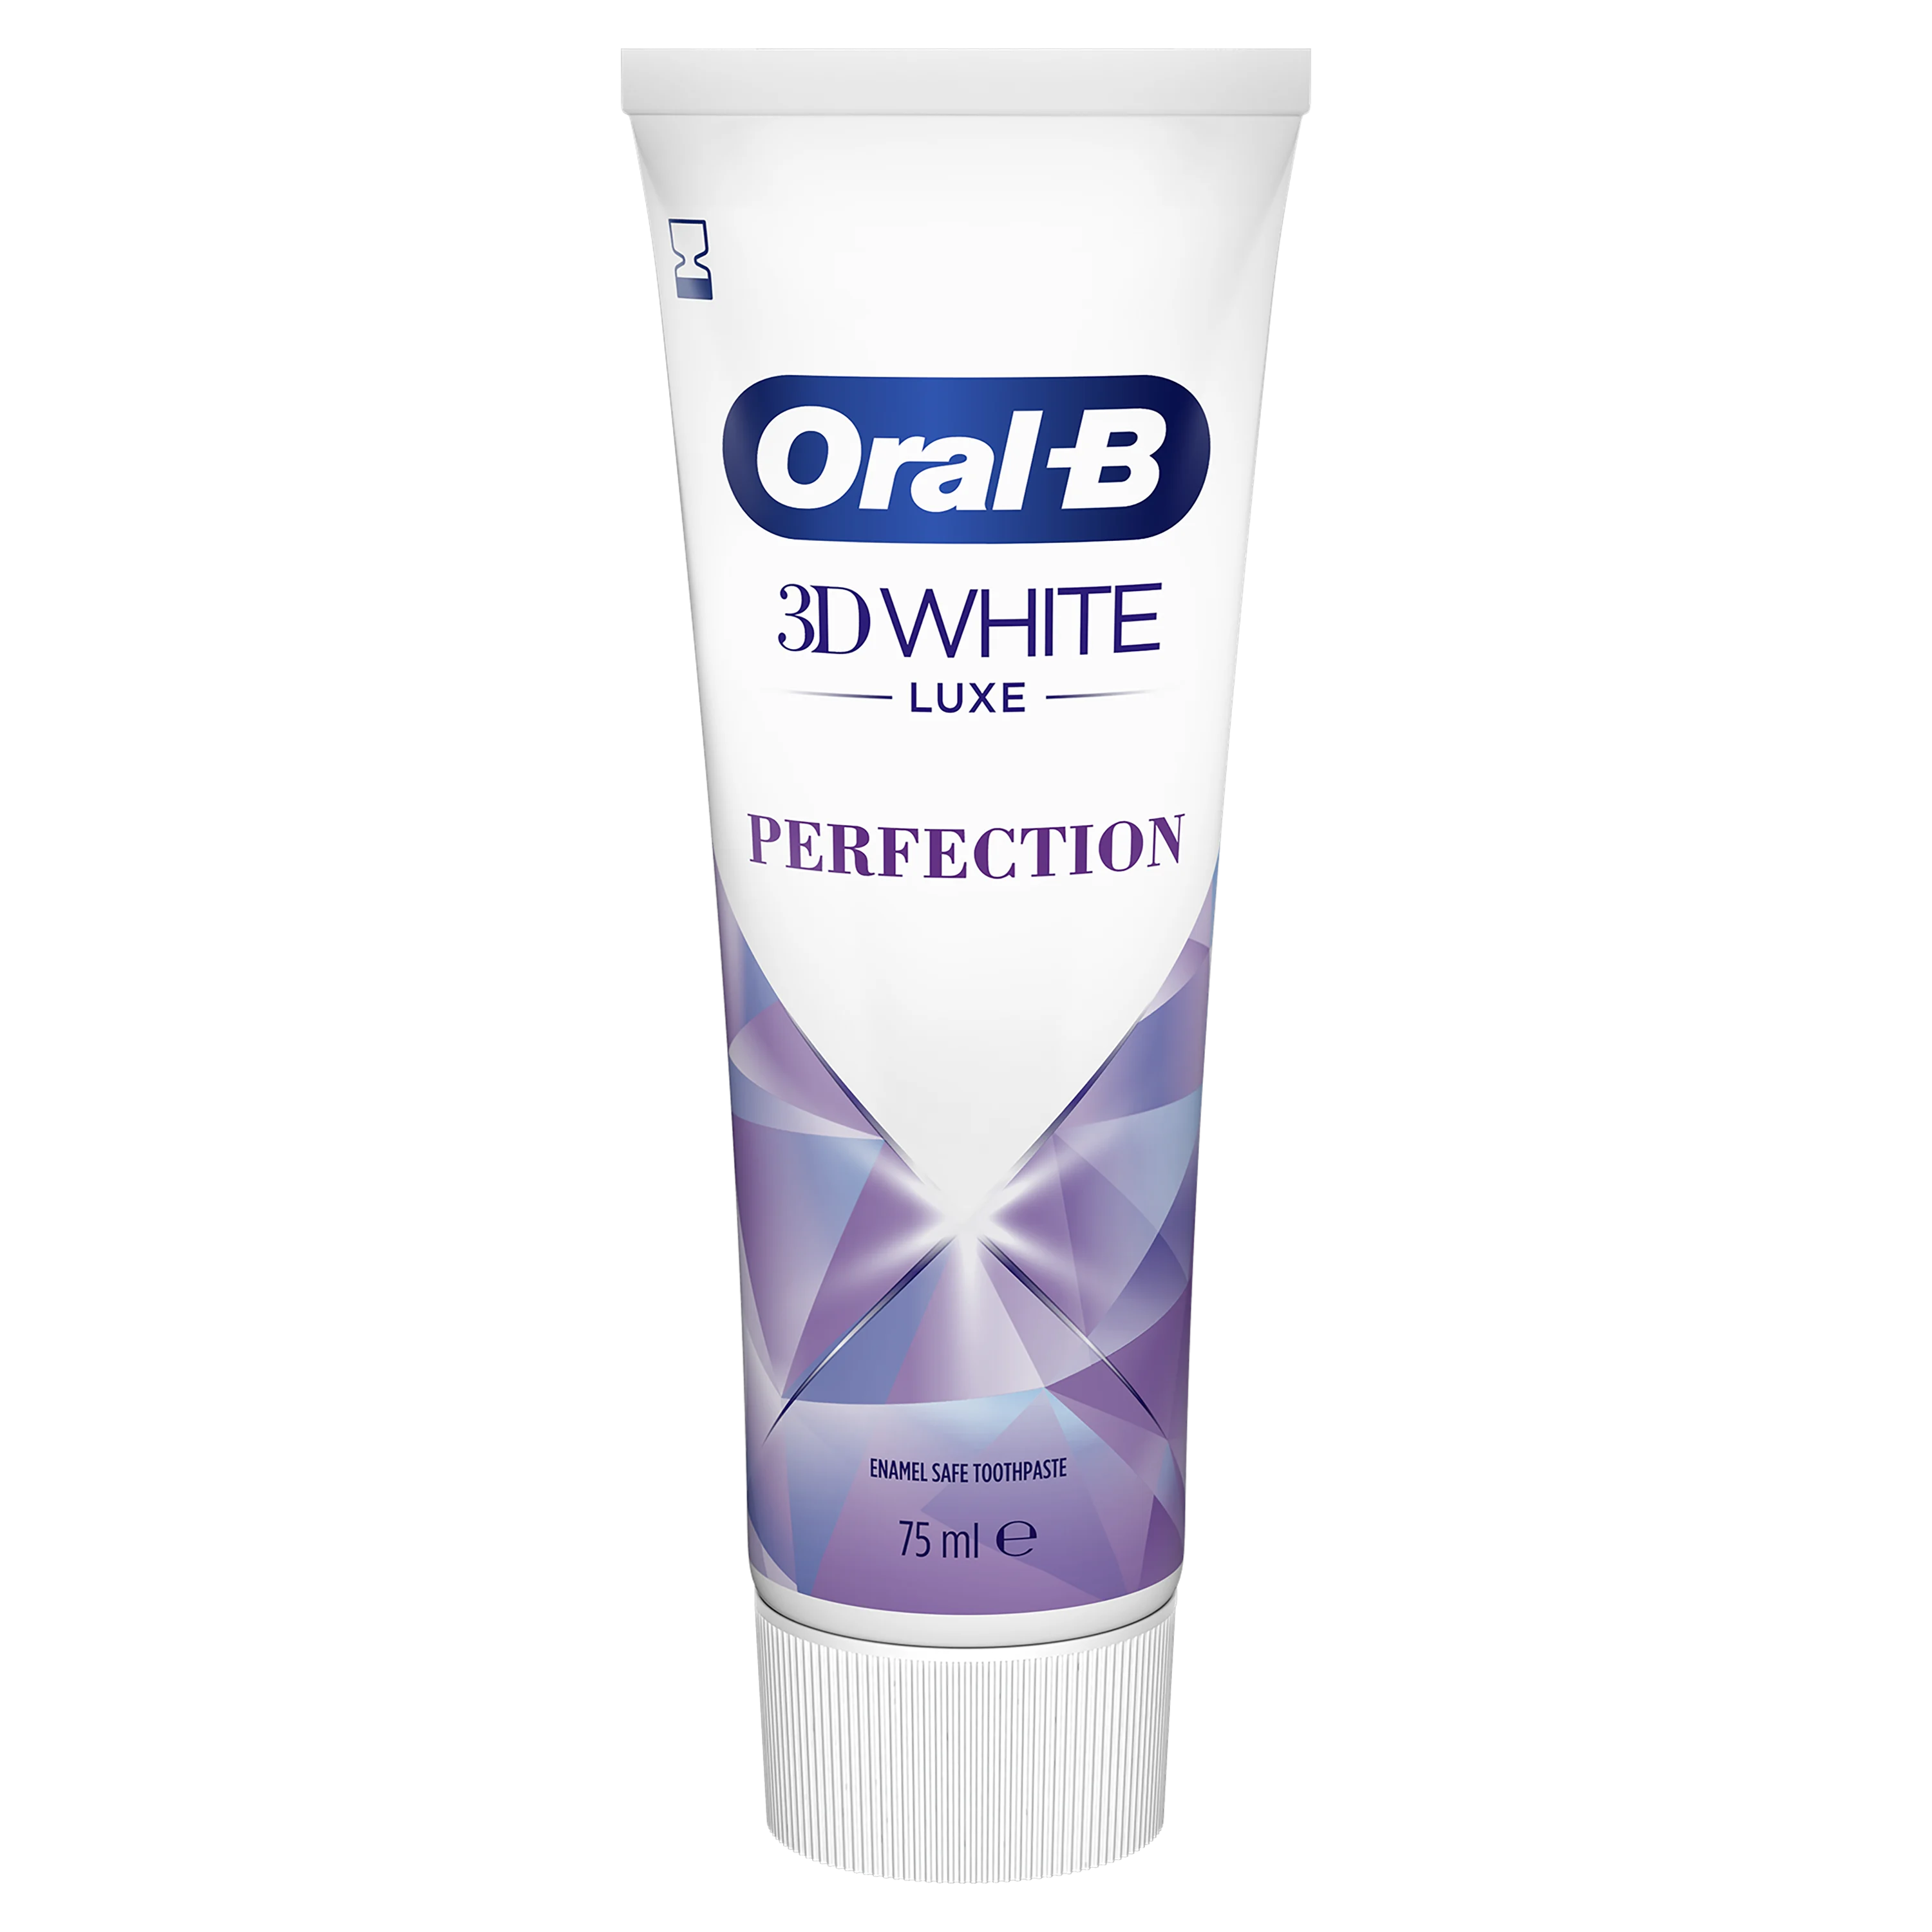 ik klaag Raap bladeren op Voorman Oral-B 3D White Luxe Perfection Toothpaste | Oral-B UK